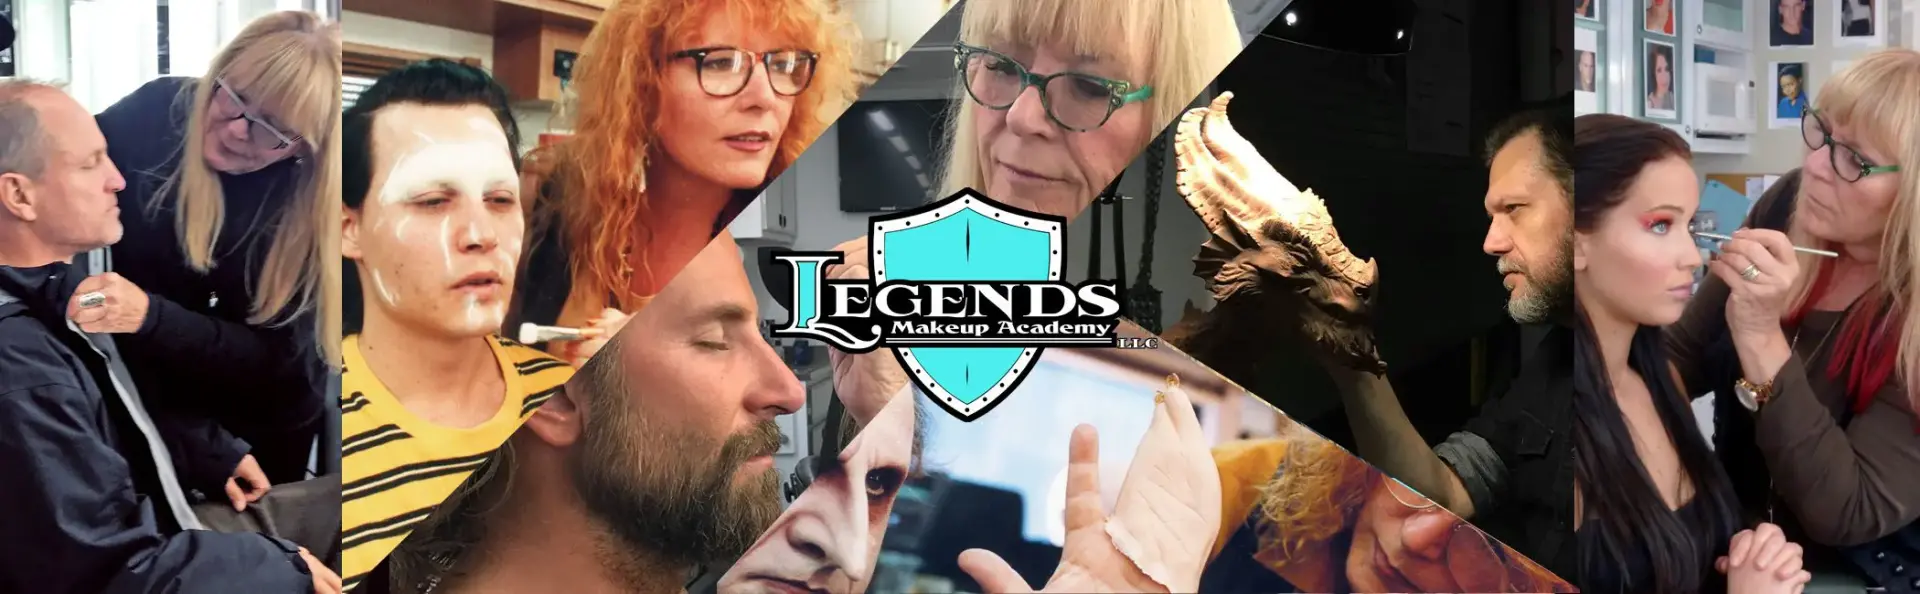 Legends makeup academy